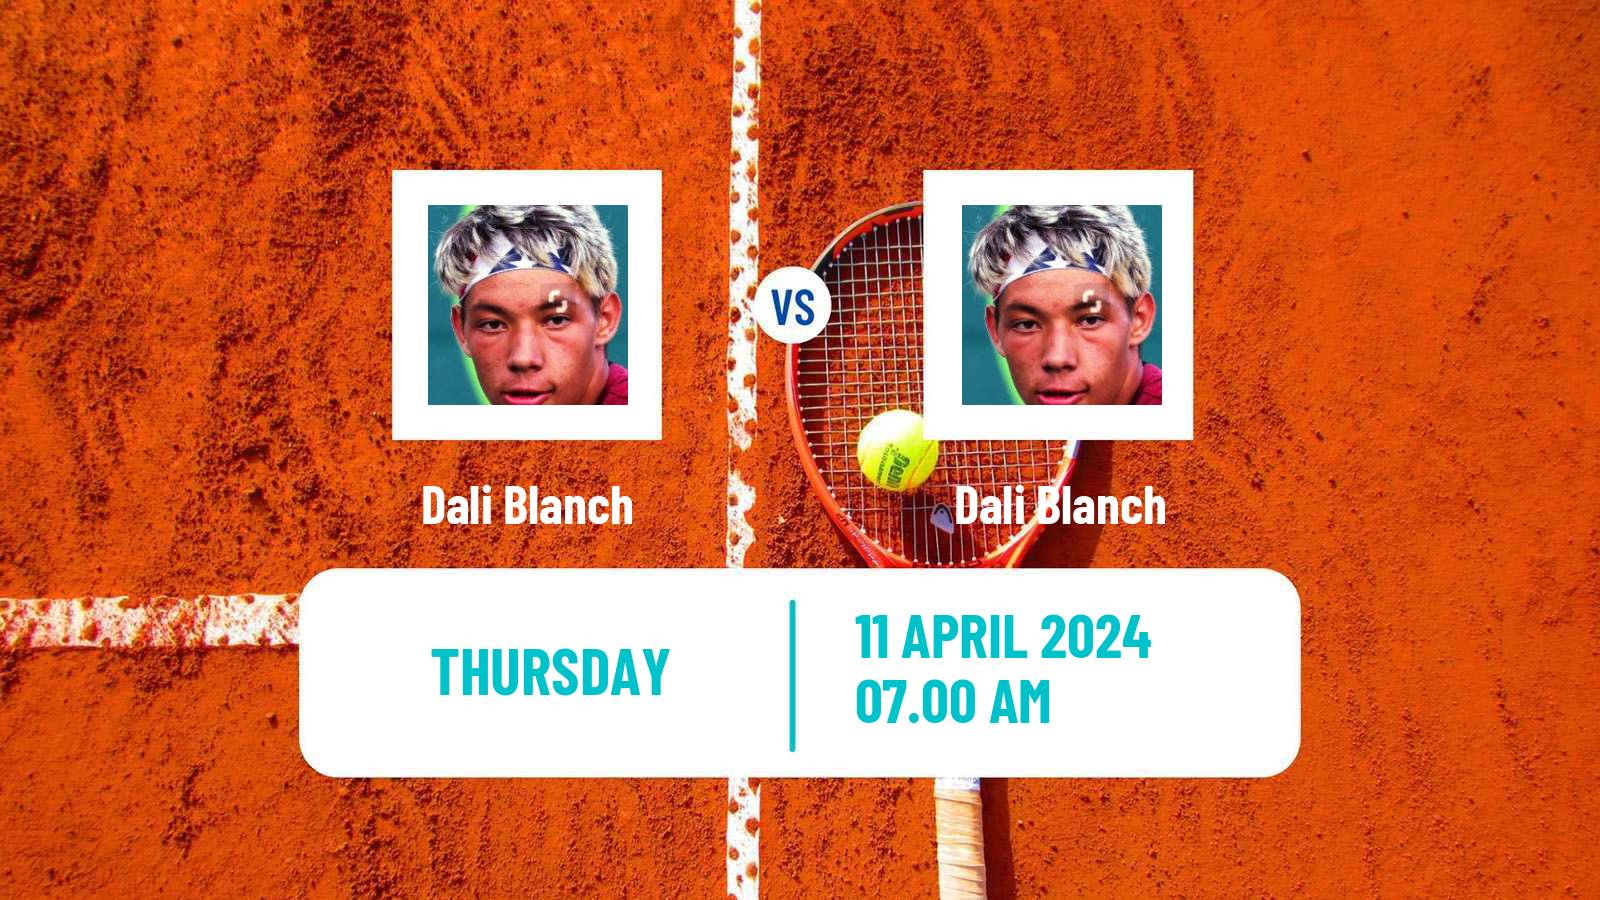 Tennis ITF M15 Telde Men Dali Blanch - Dali Blanch